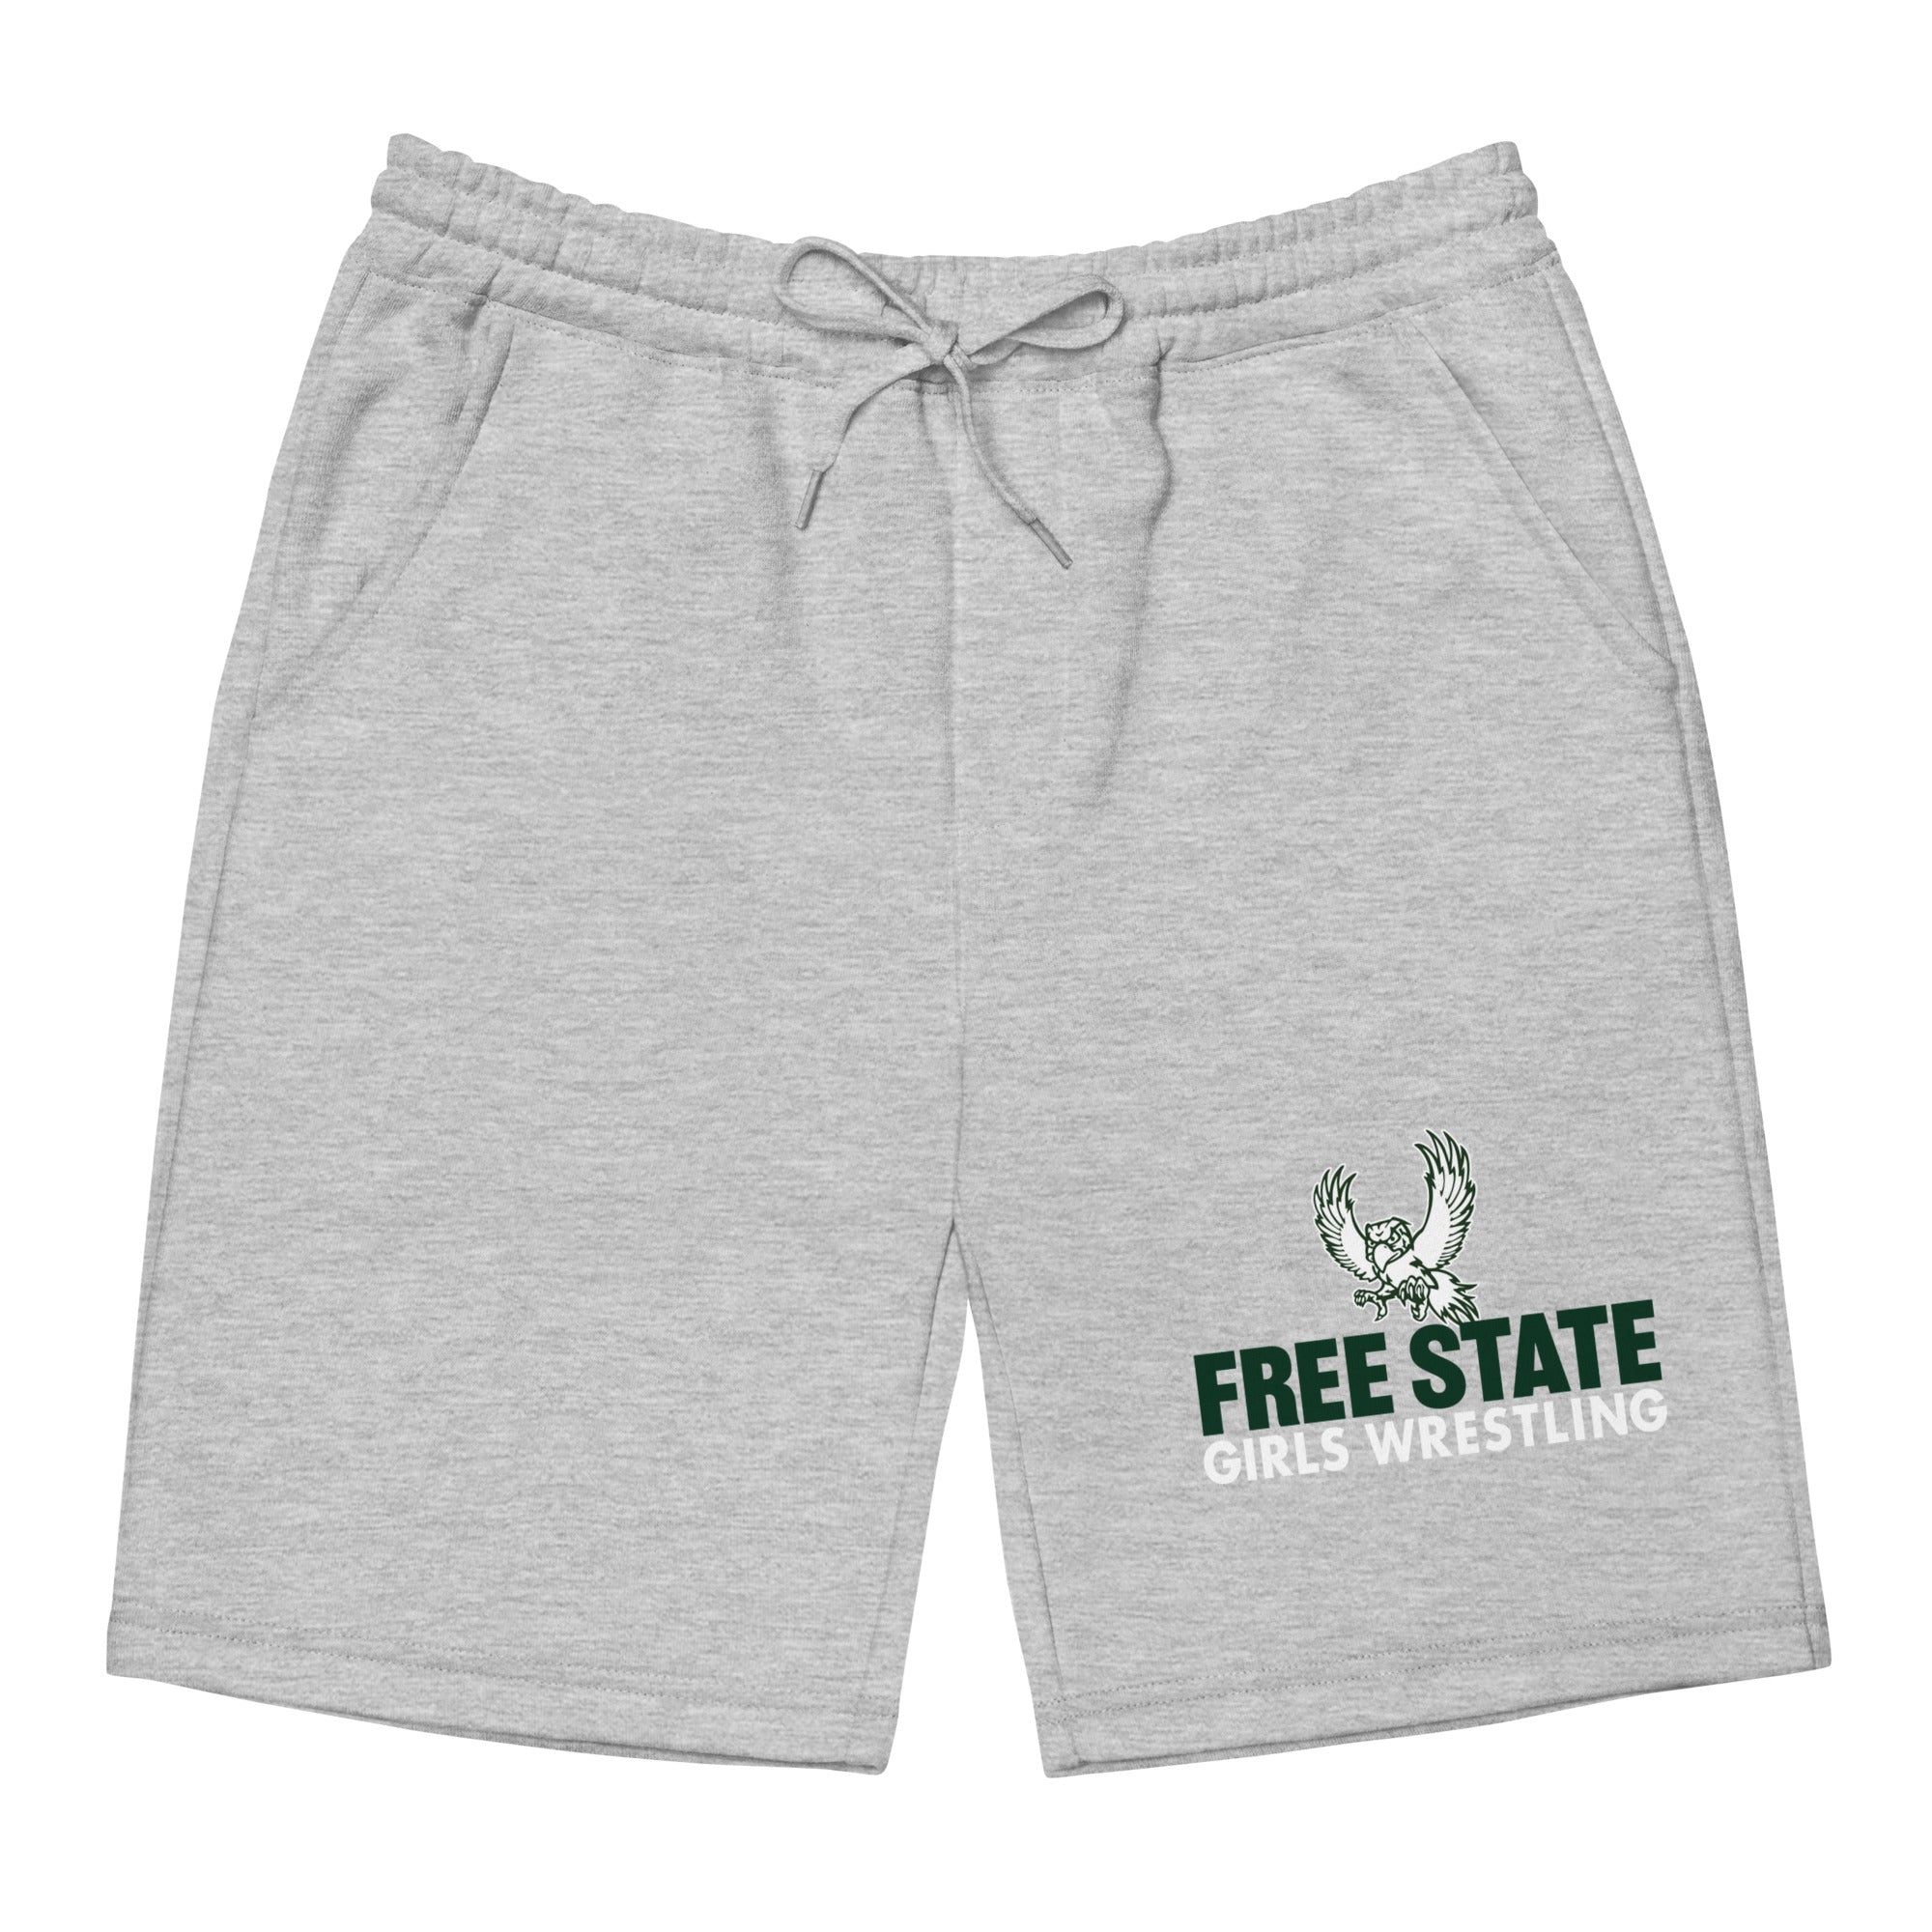 Lawrence Free State Girls Wrestling  Mens Fleece Shorts